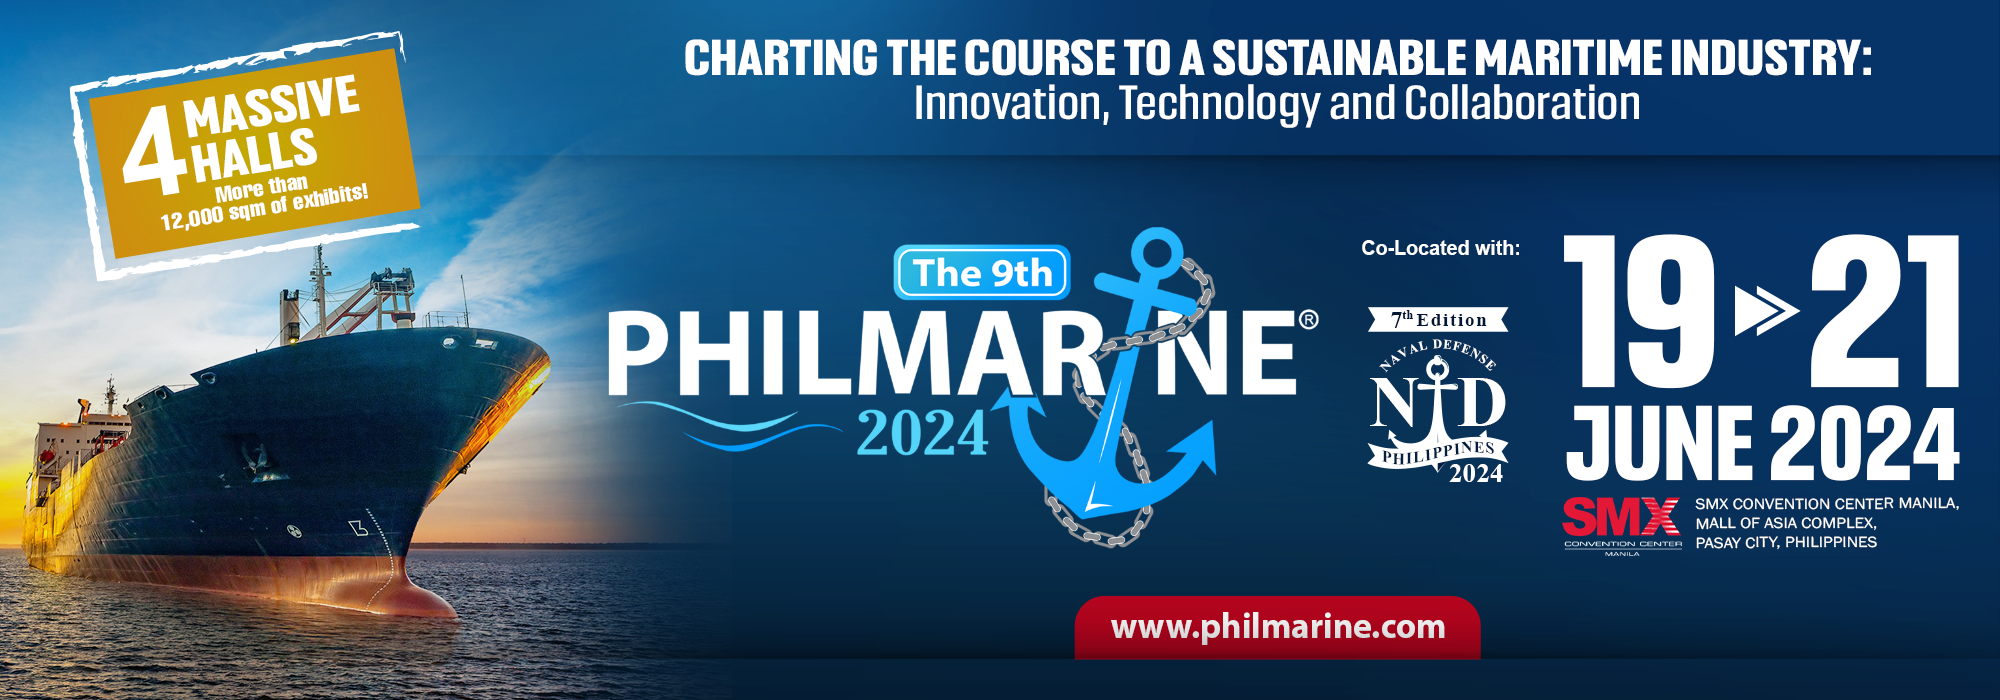 PhilMarine Expo 2024, PASAY CITY, National Capital Region, Philippines